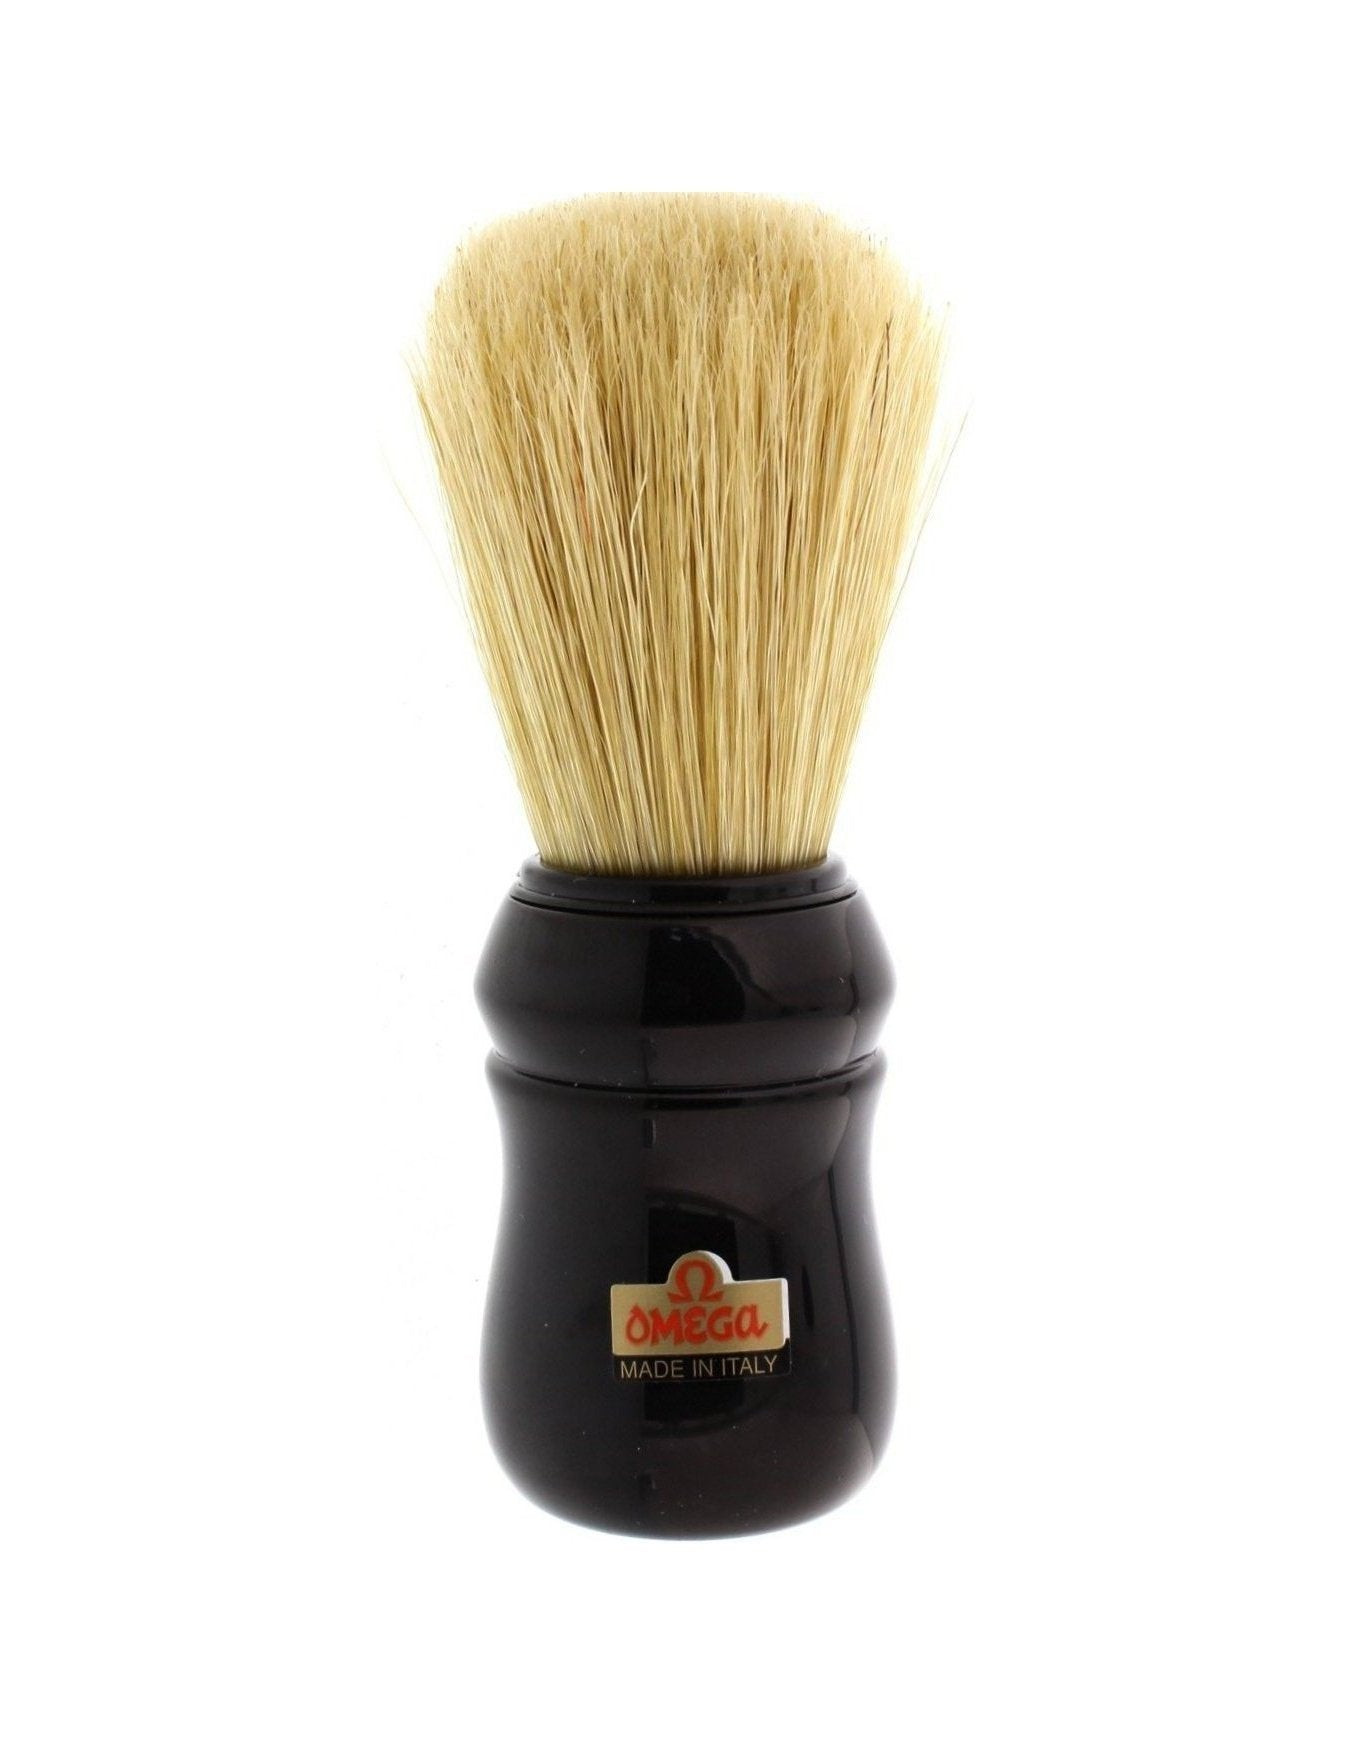 Product image 1 for Omega 10049 Professional Boar Shaving Brush, Black Handle